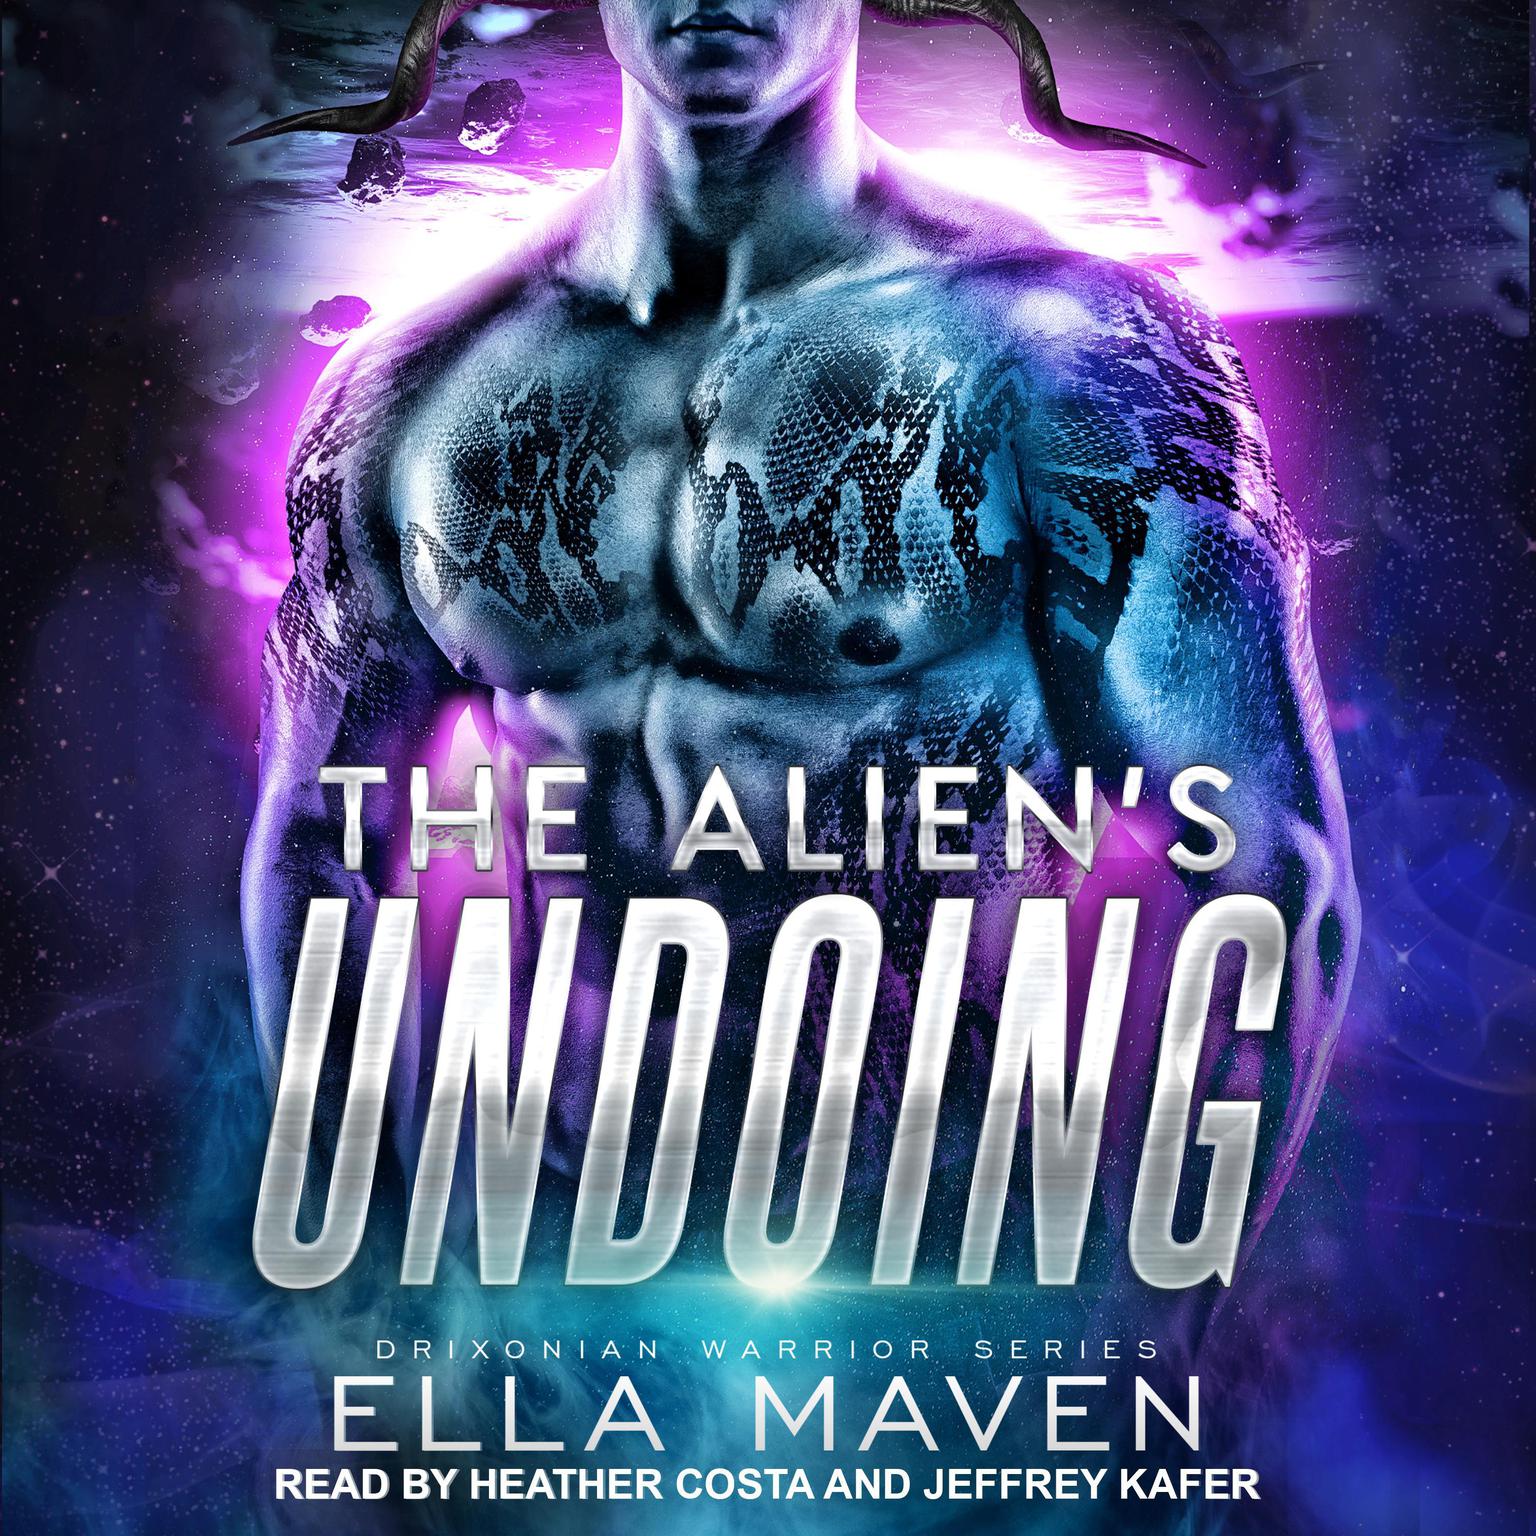 The Aliens Undoing Audiobook, by Ella Maven